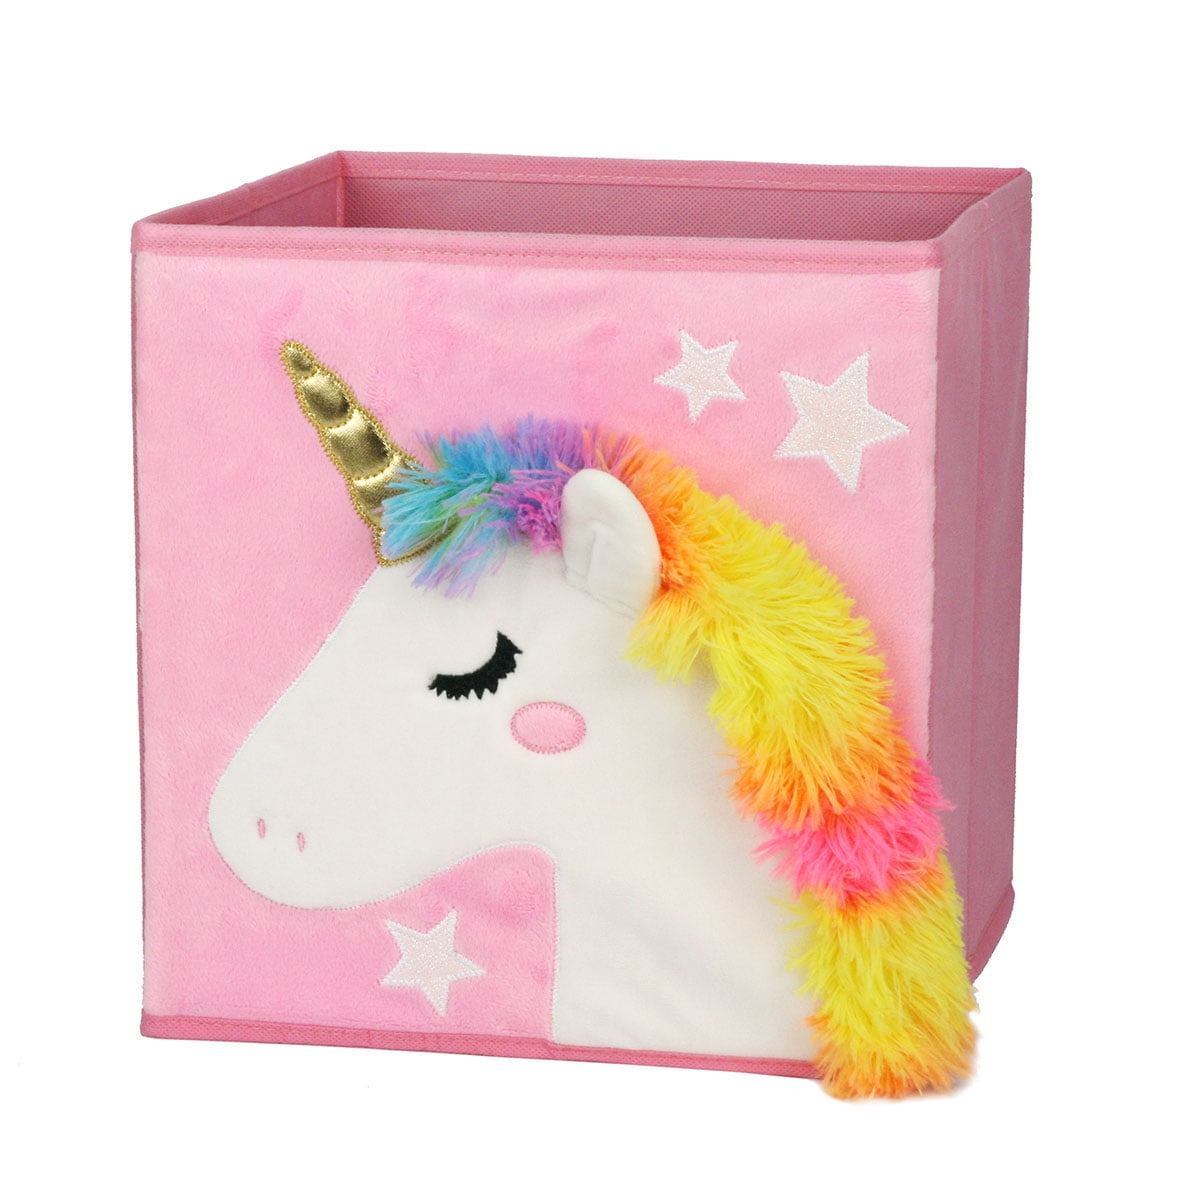 unicorn collapsible storage box